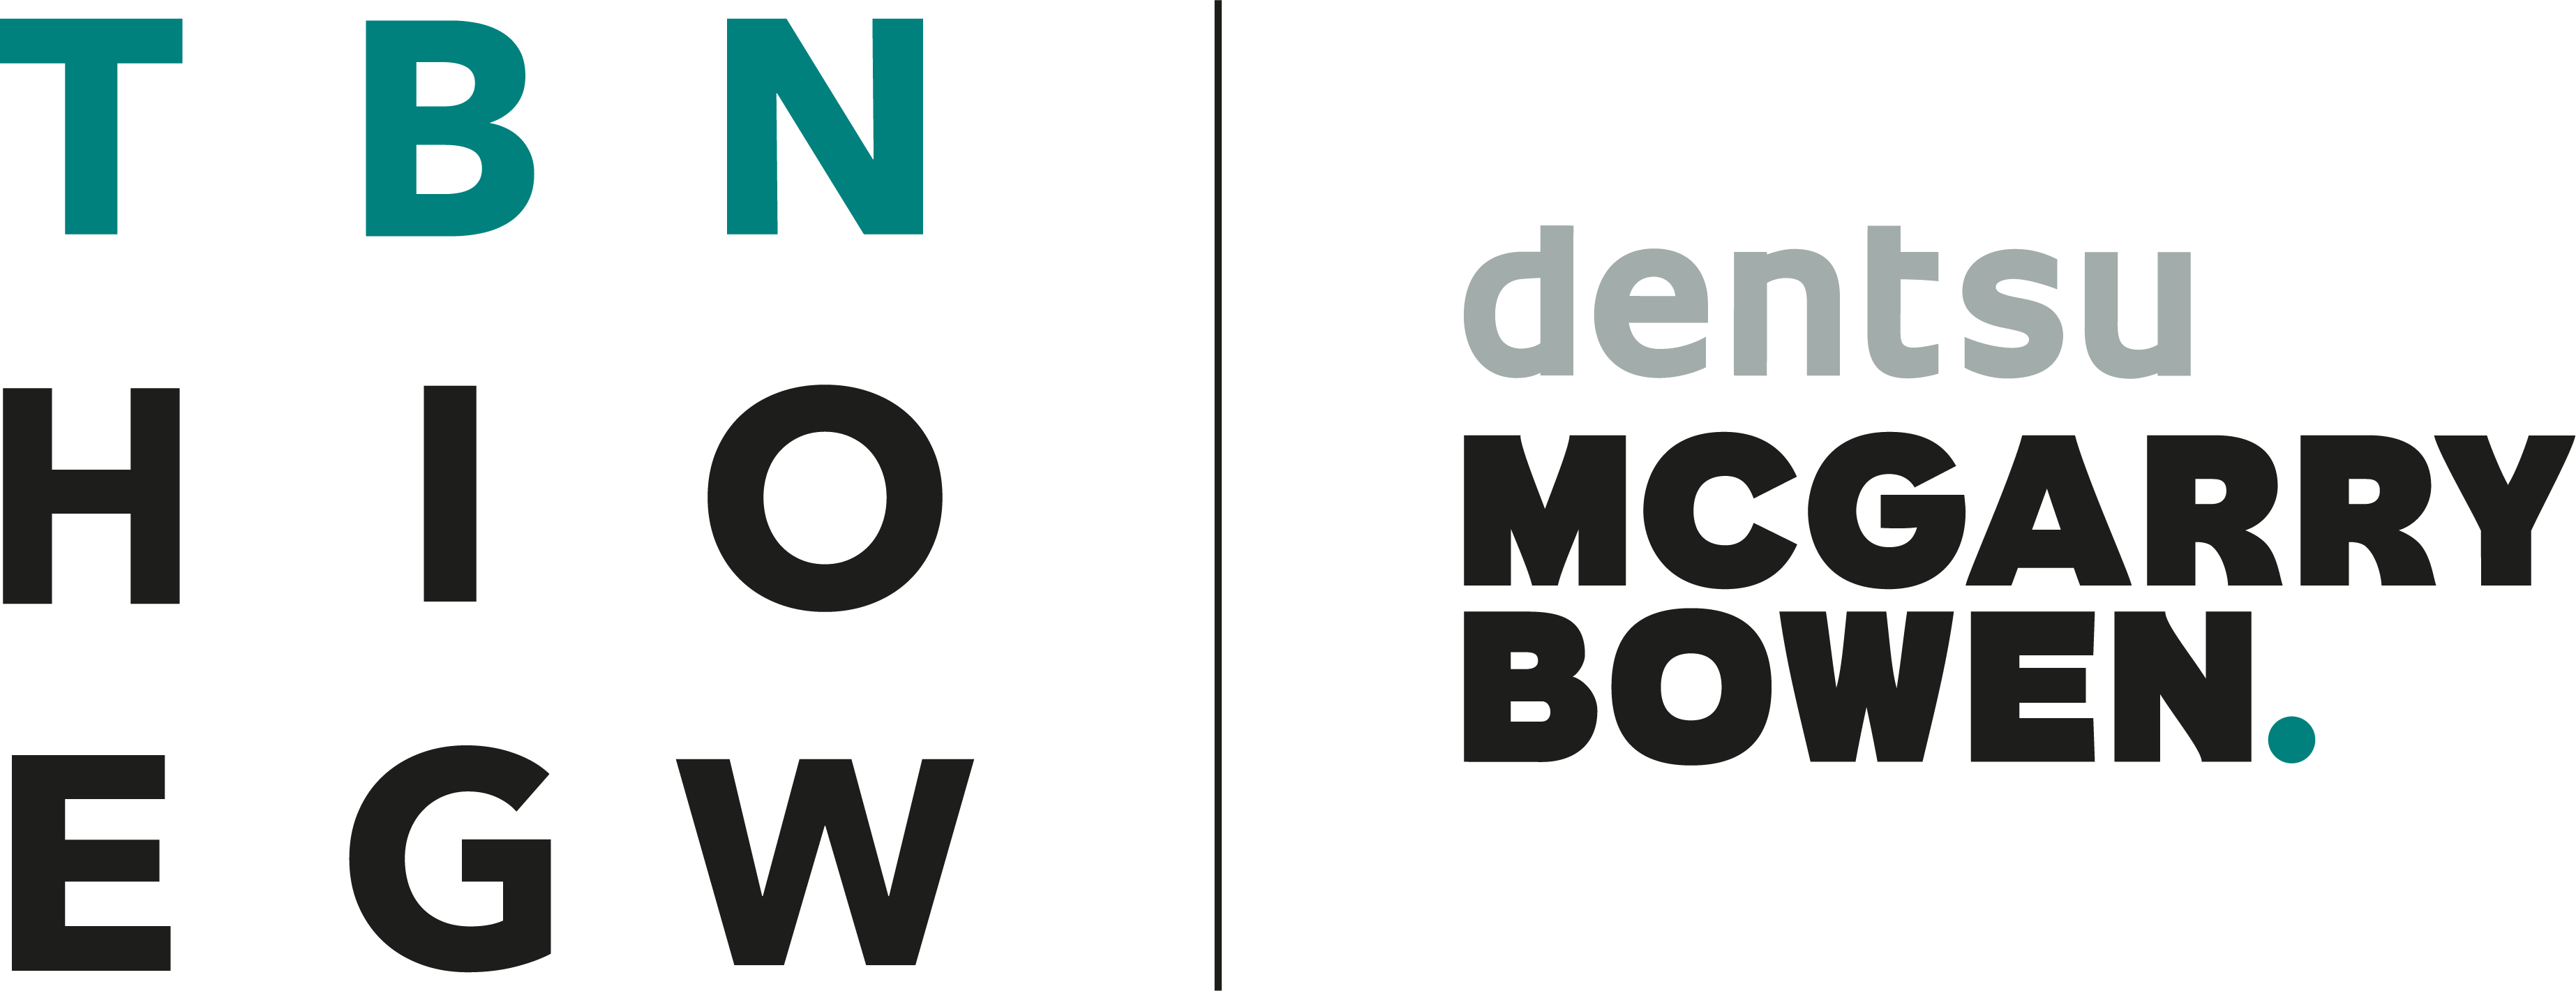 dentsumcgarrybowen logo